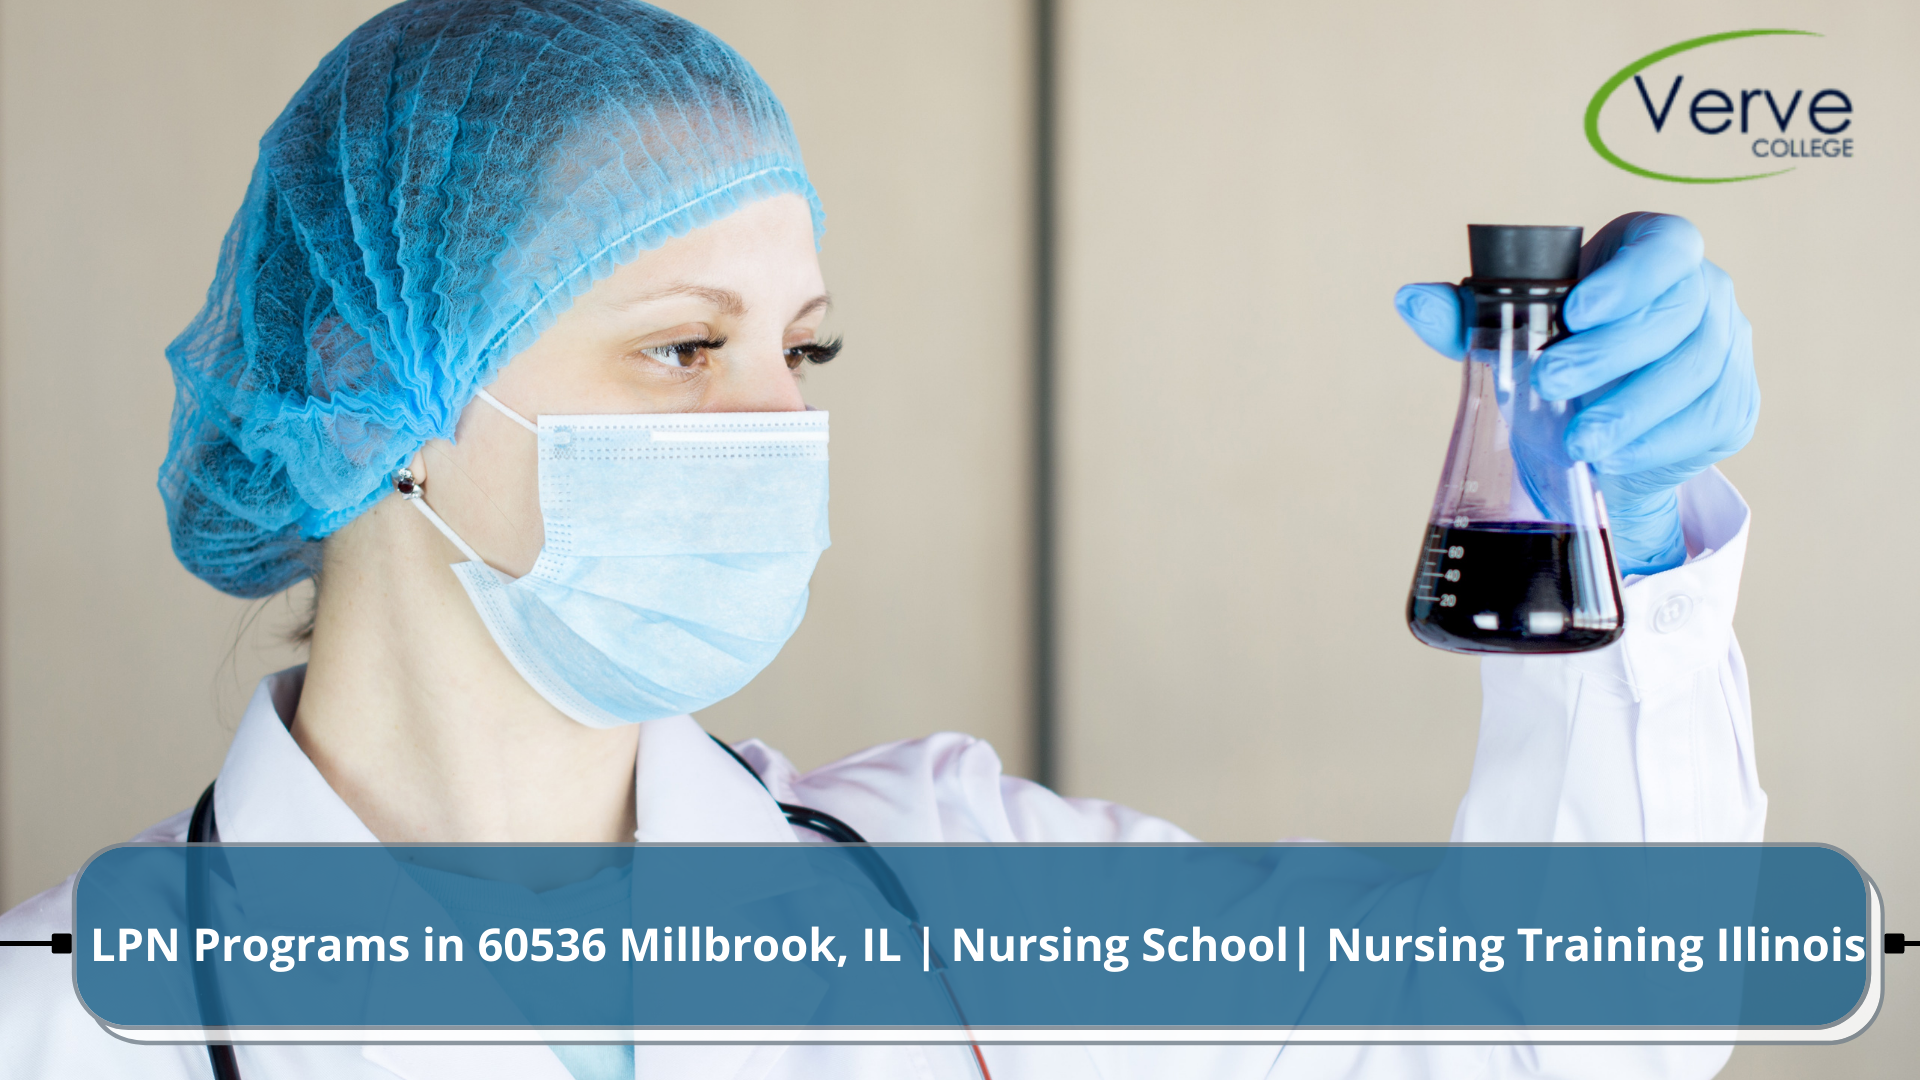 LPN Programs in 60536 Millbrook, IL | Nursing School| Nursing Training Illinois